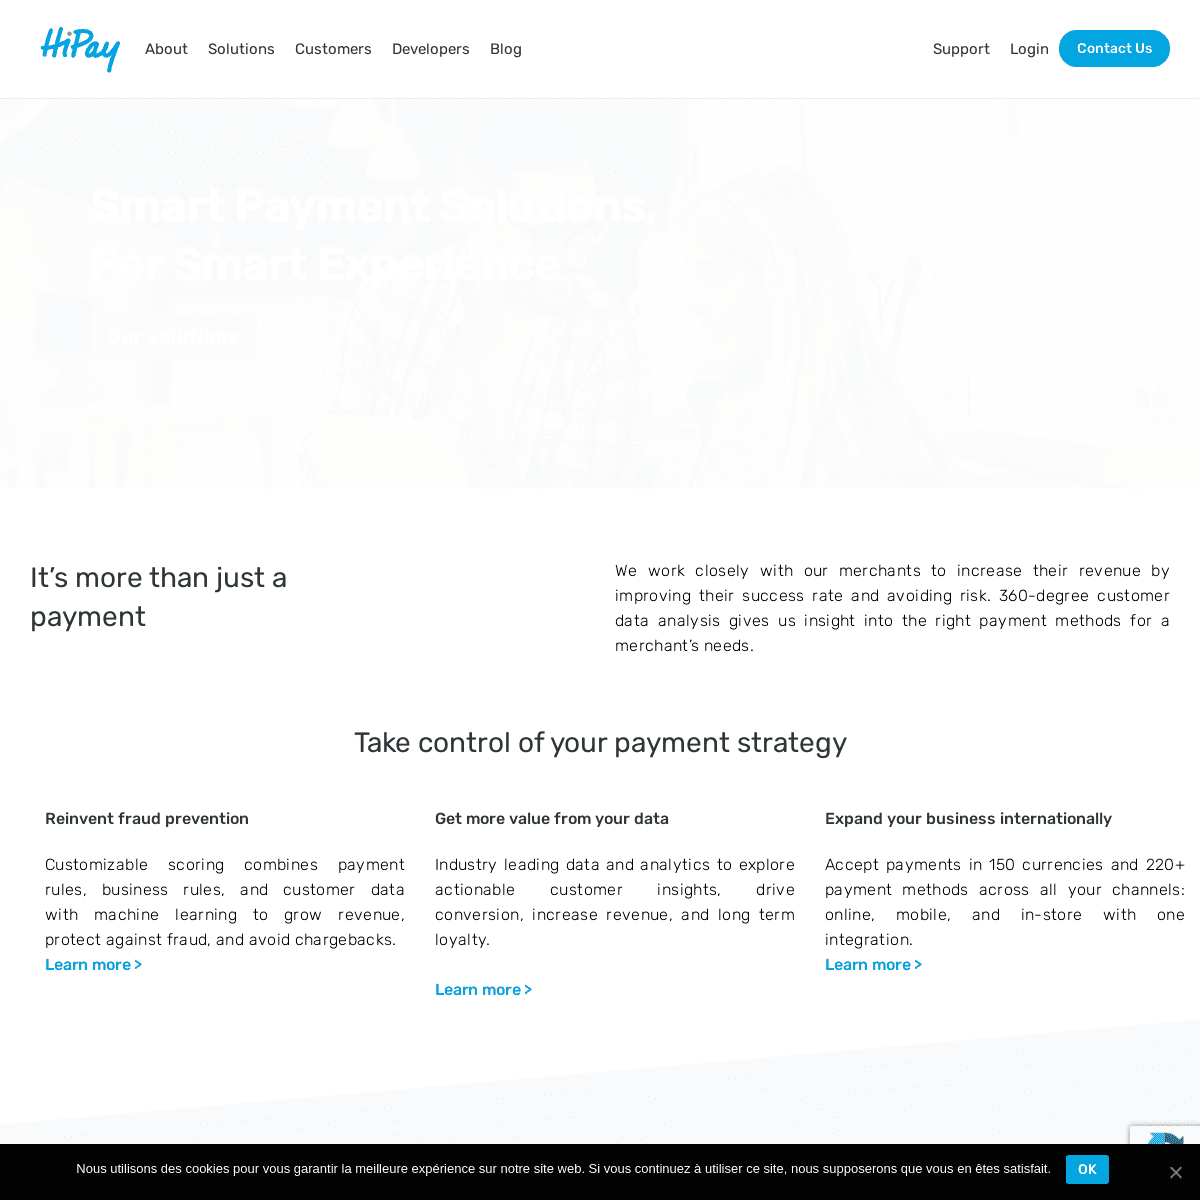 A complete backup of hipay.com